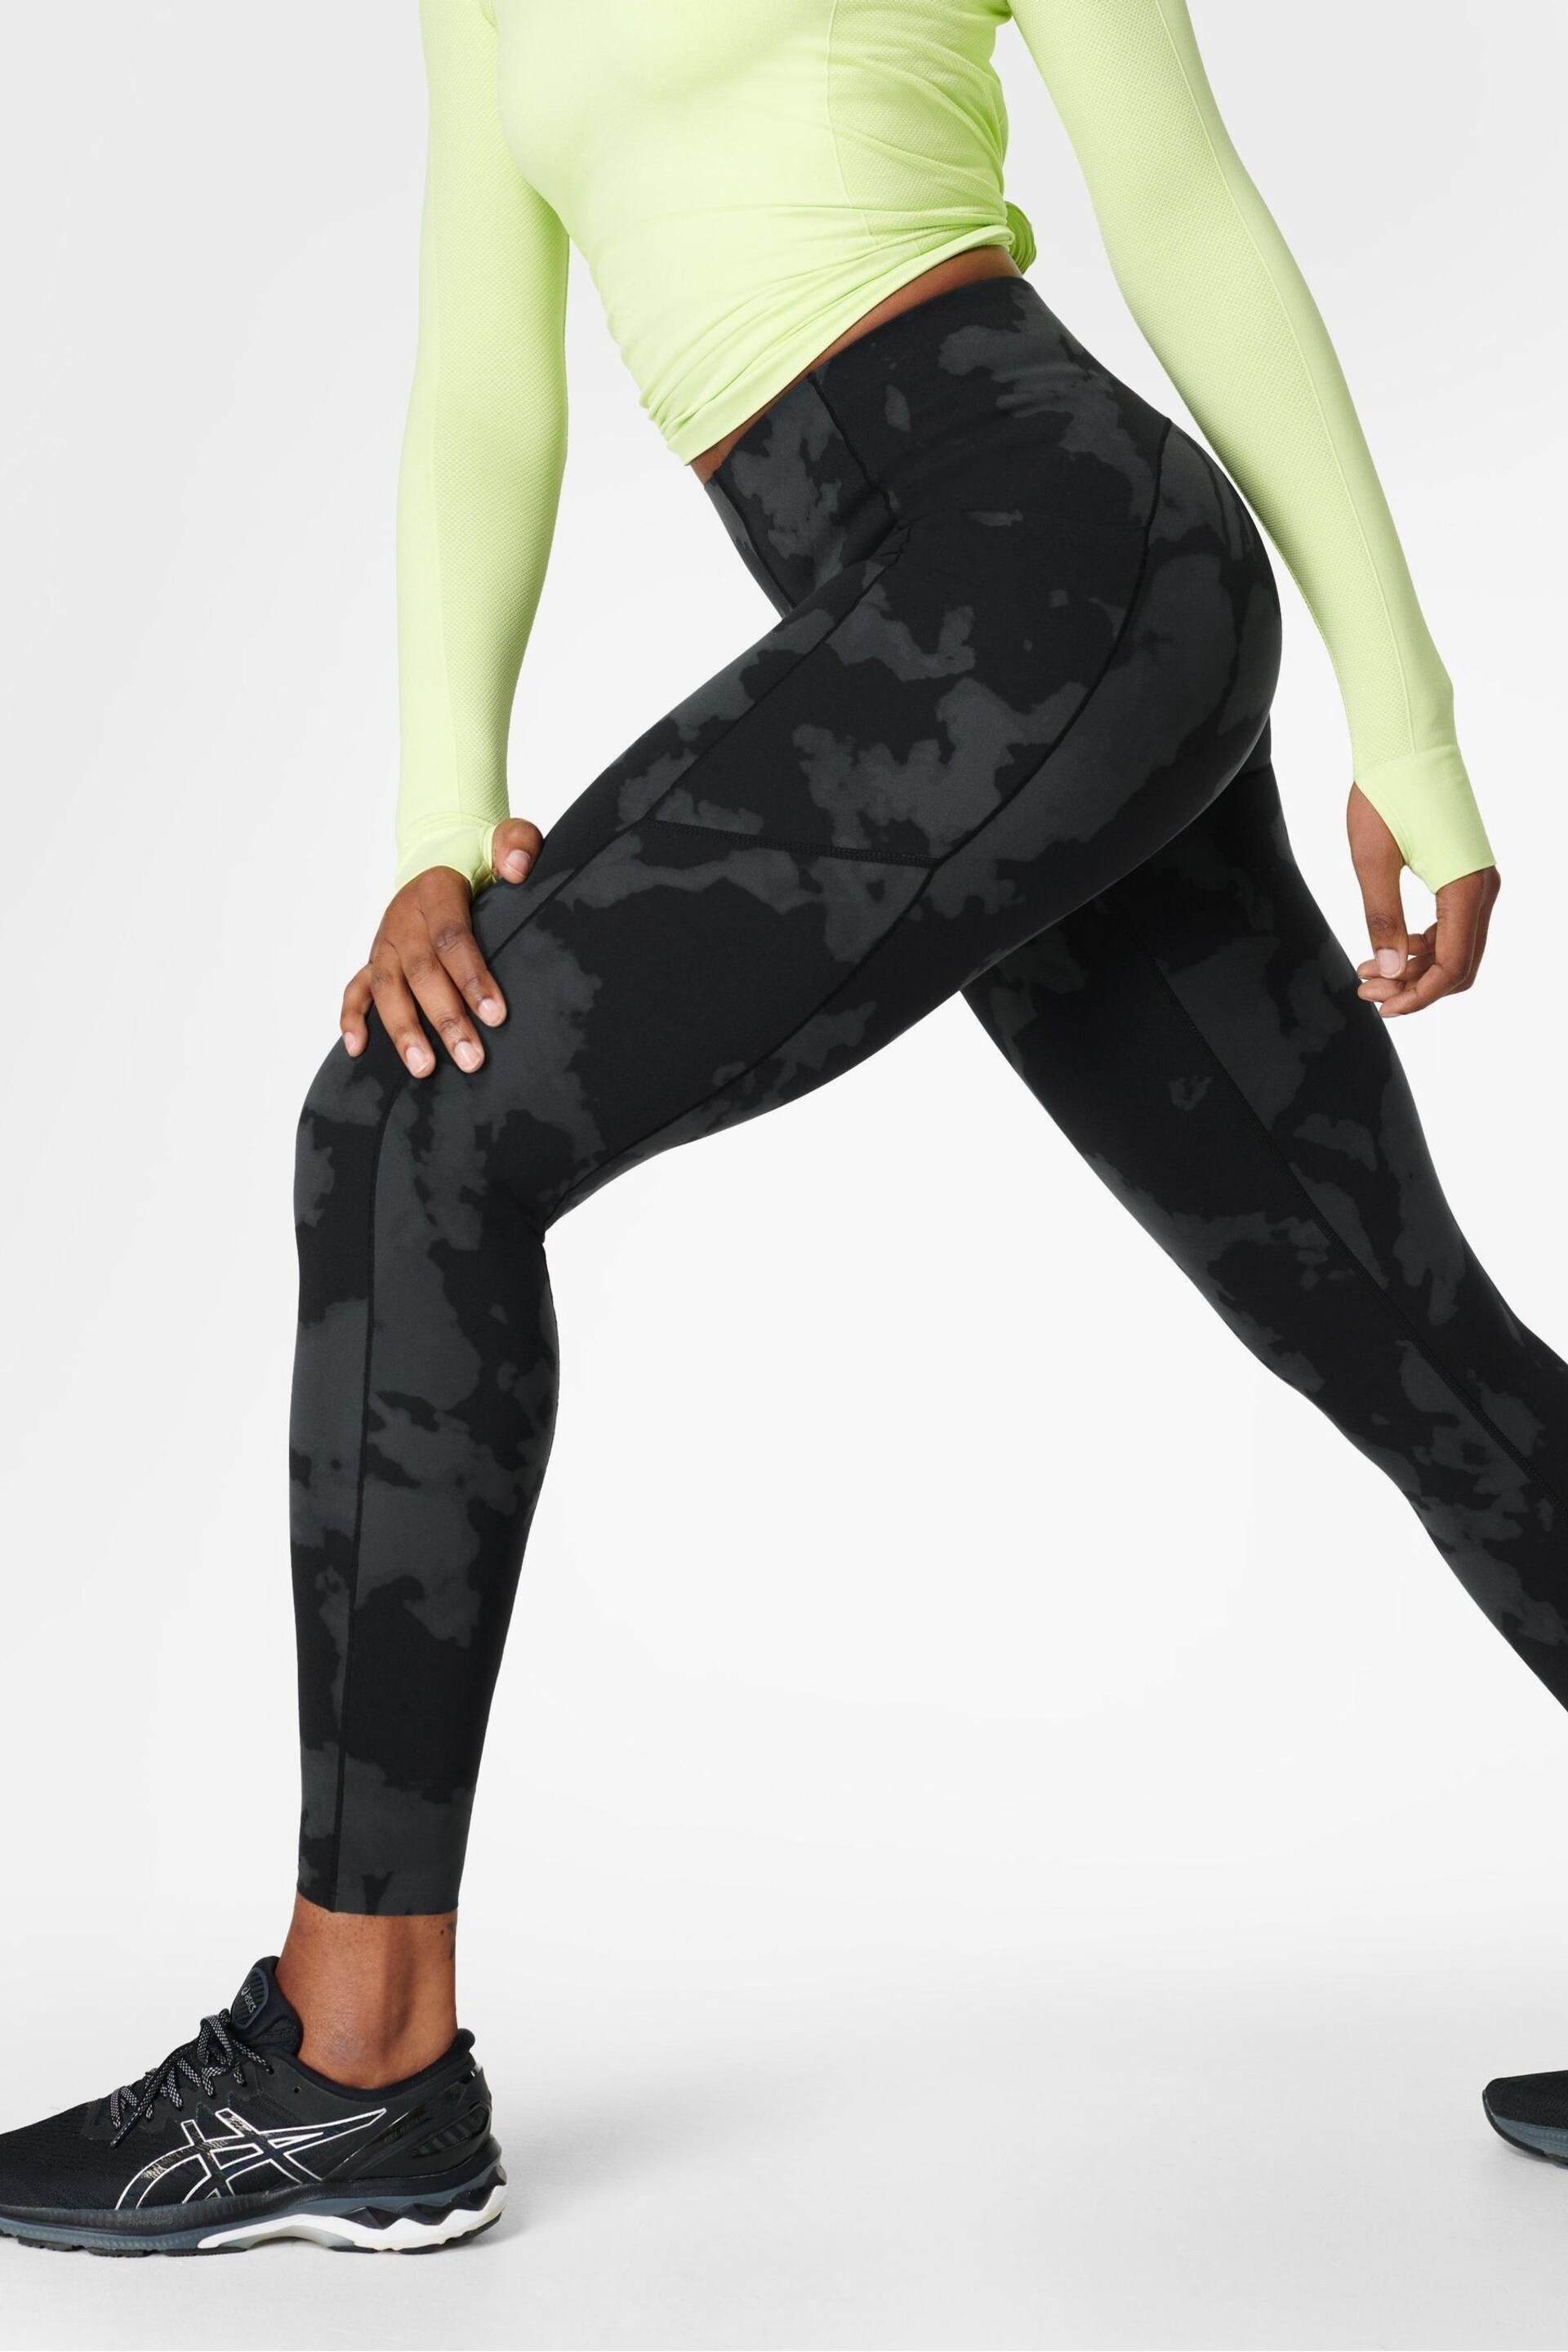 Sweaty Betty Black Fade Print Full Length Power UltraSculpt High Waist Workout Leggings - Image 2 of 6